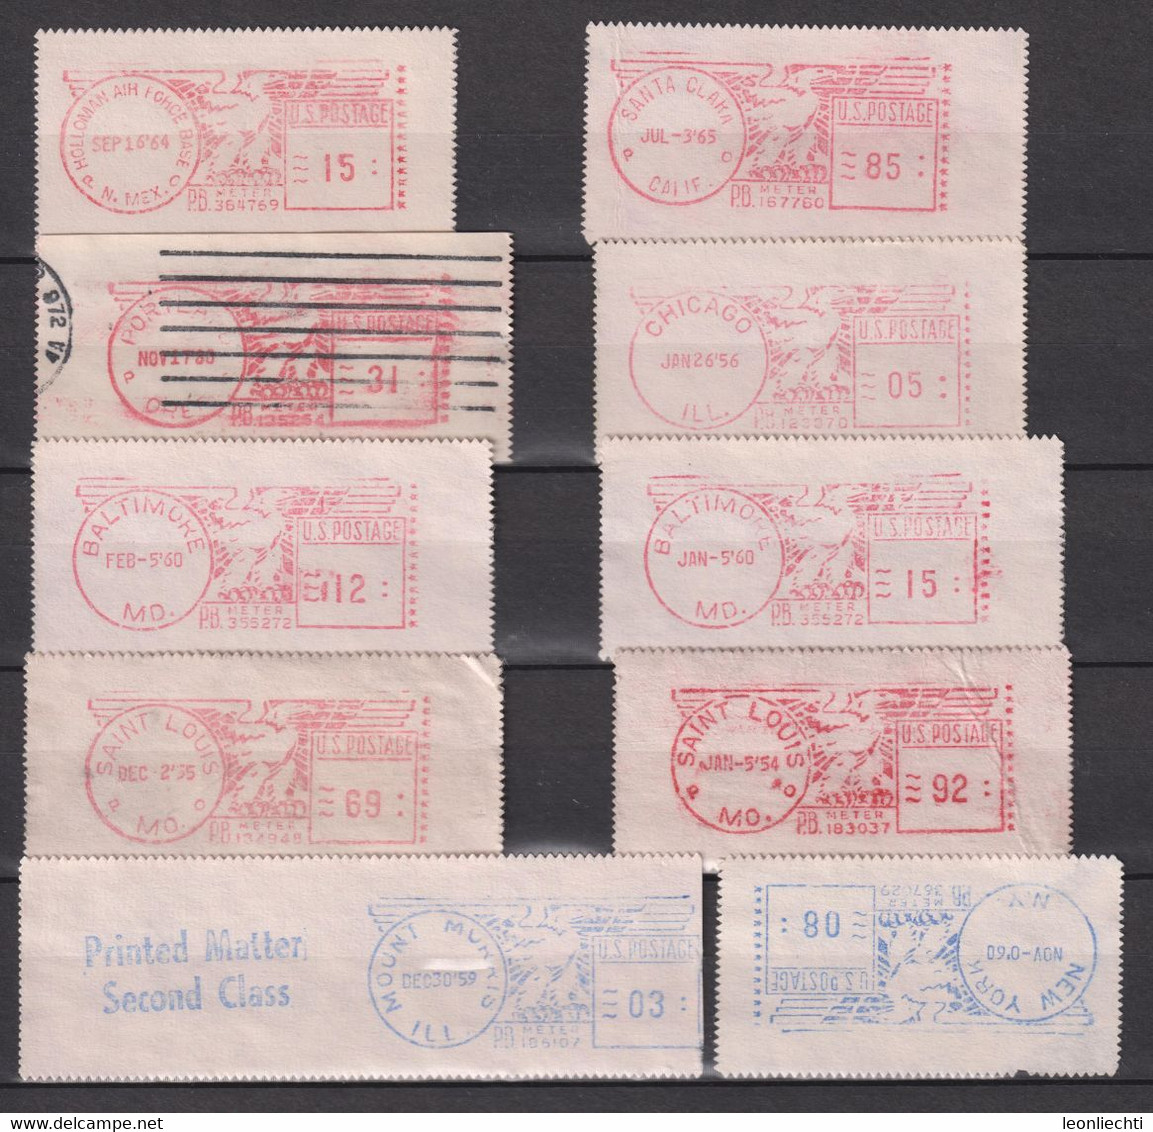 Fragment Meter Stamp 10 Stk. - Machine Labels [ATM]